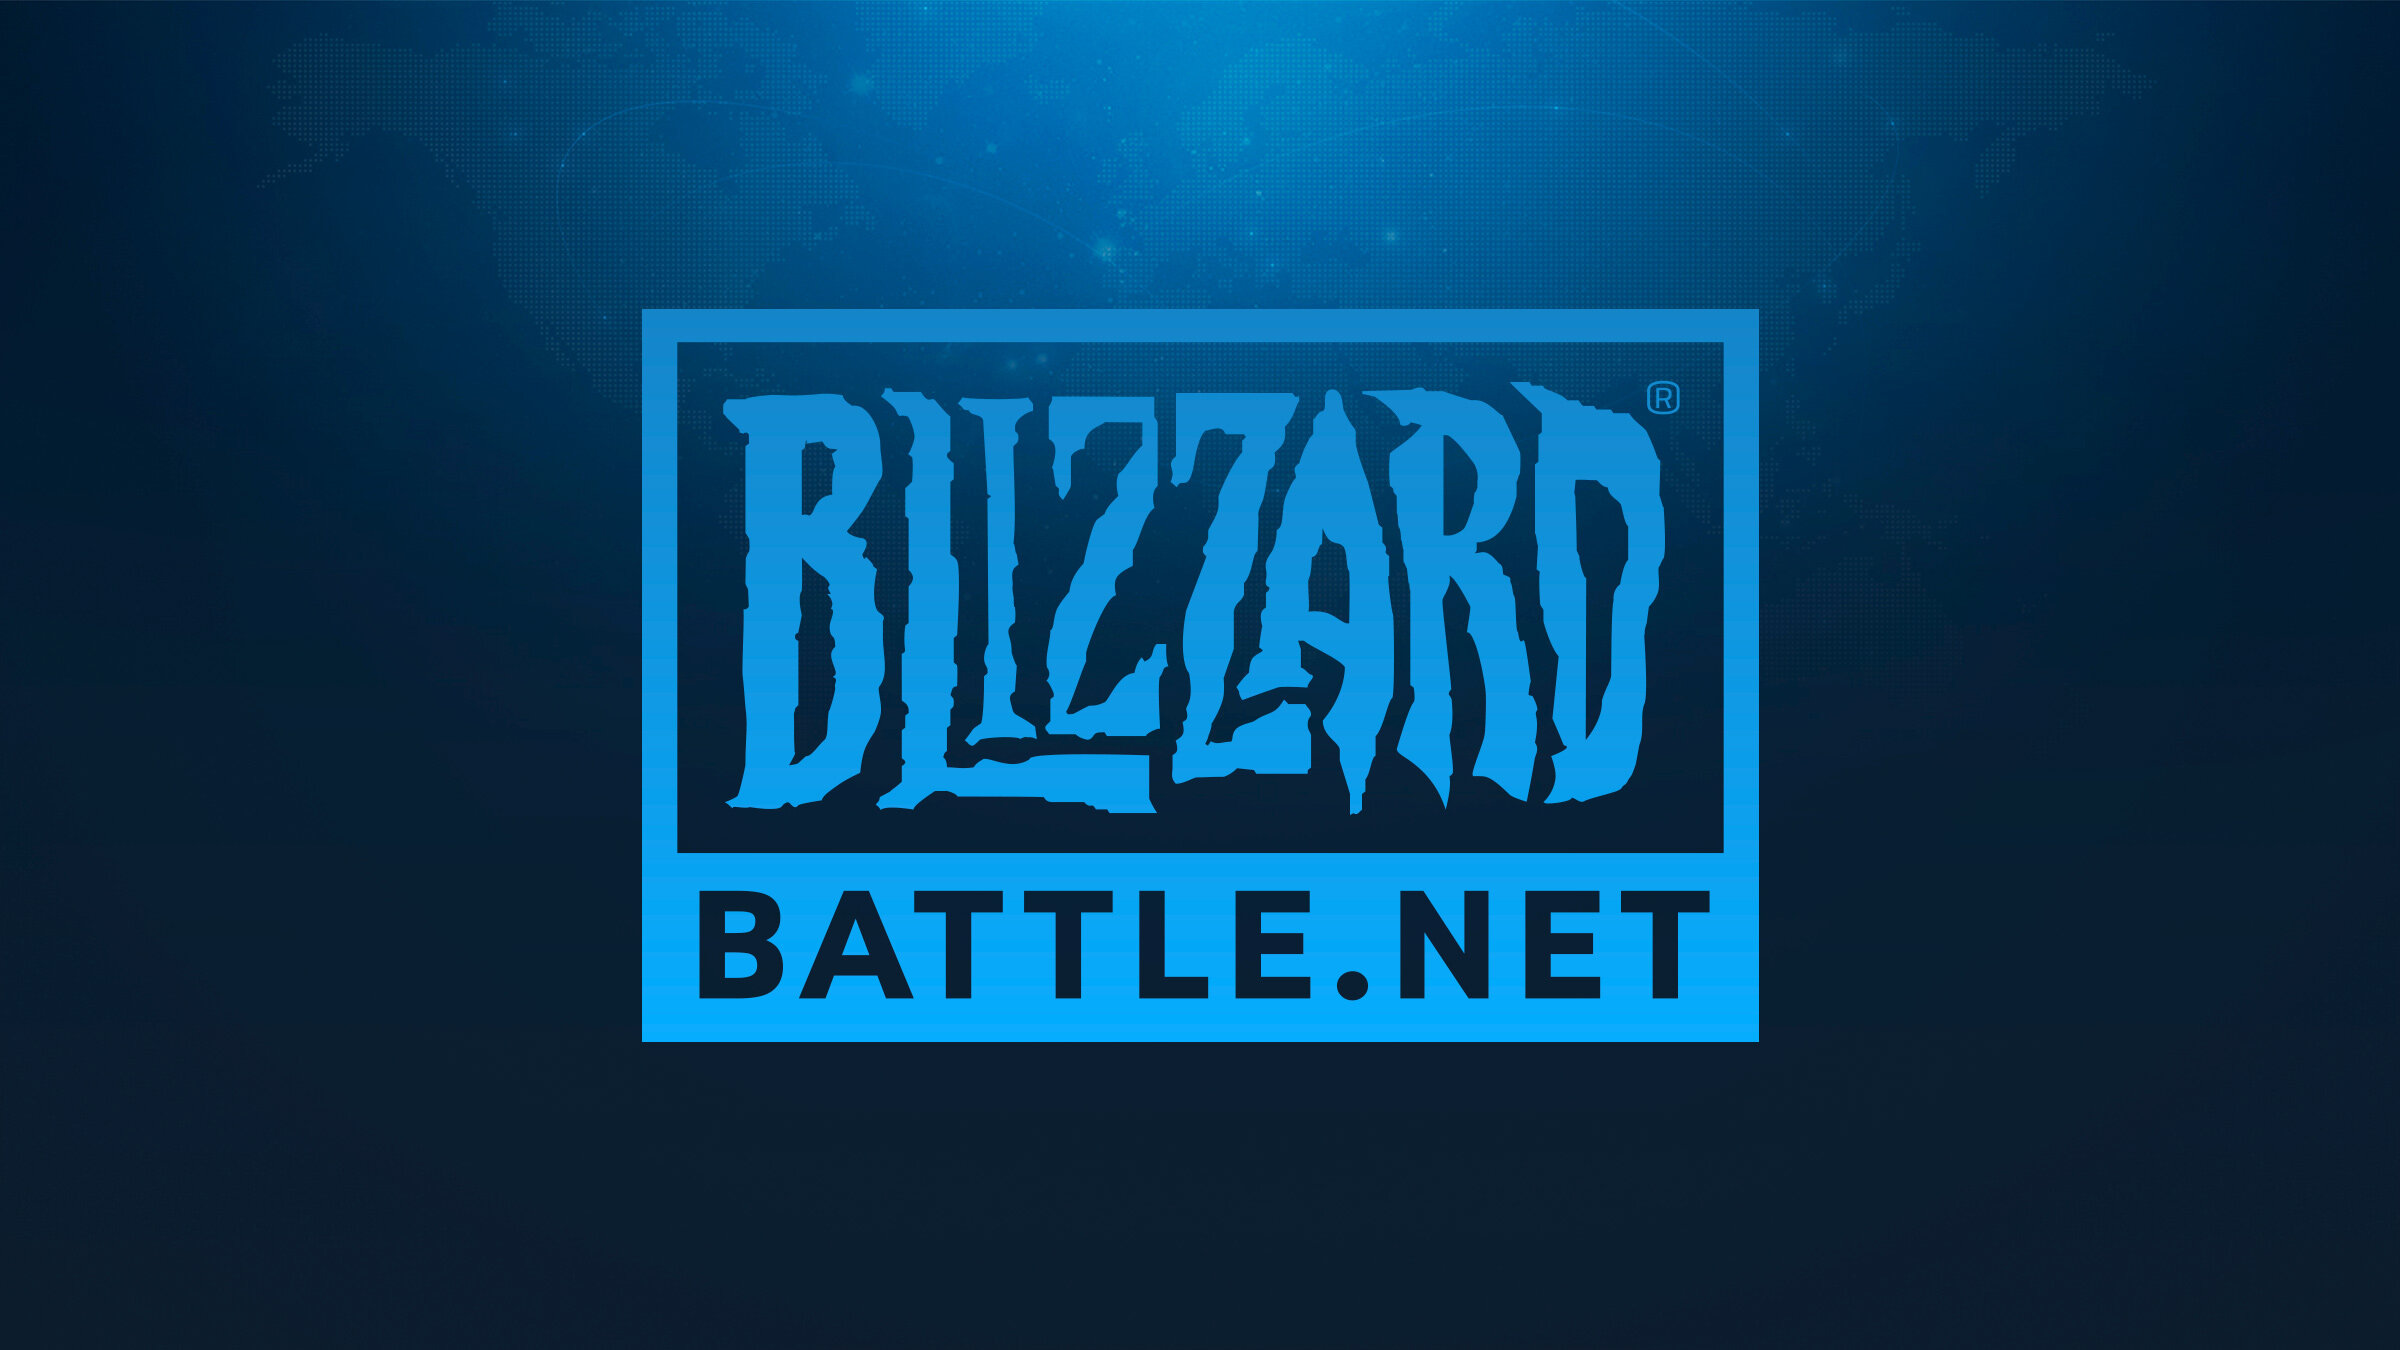 Подарочная карта Blizzard BattleNET EUR регион Европа